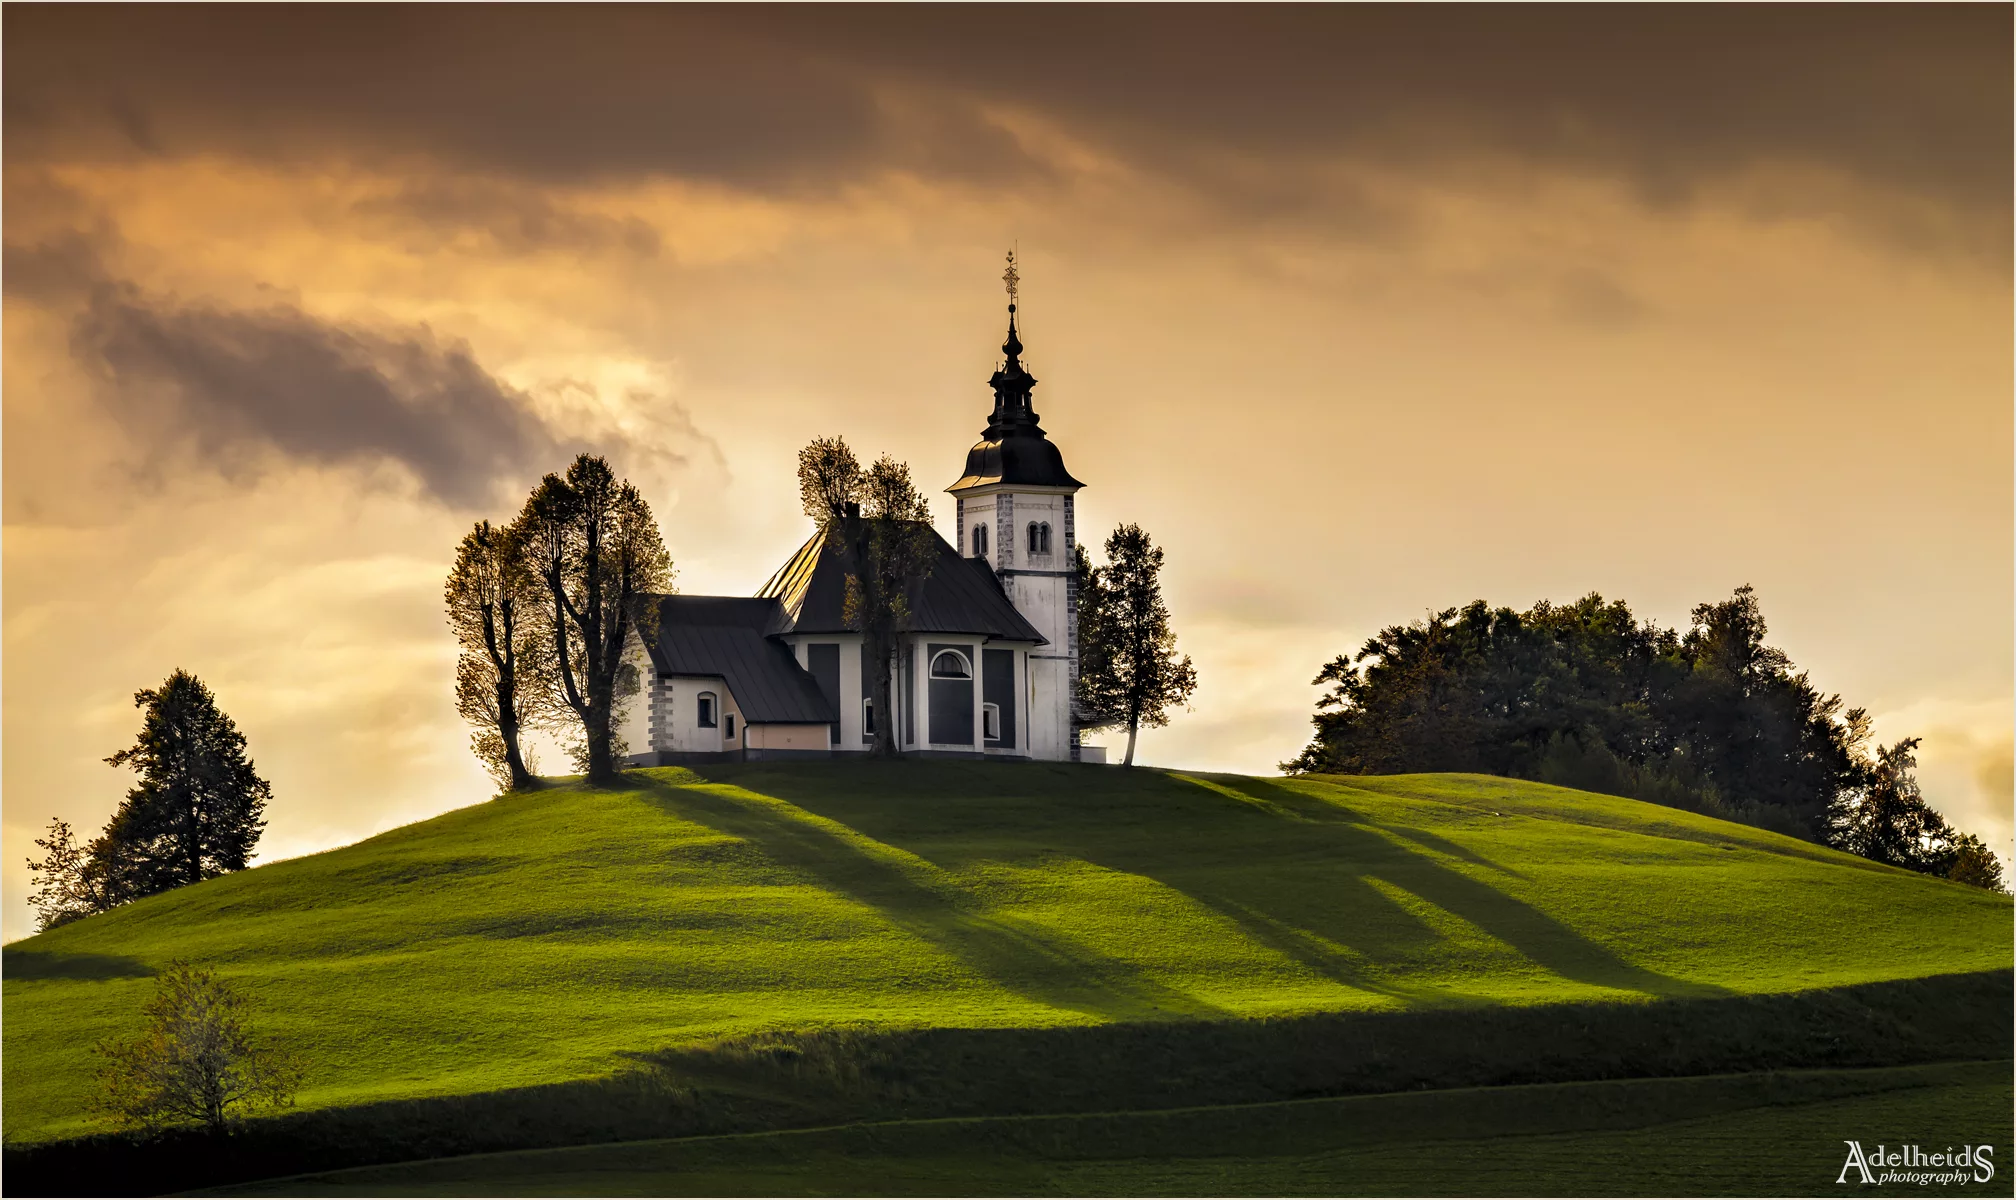 Our Lady of Sorrows Church (Sv. Sobota), Slovenia